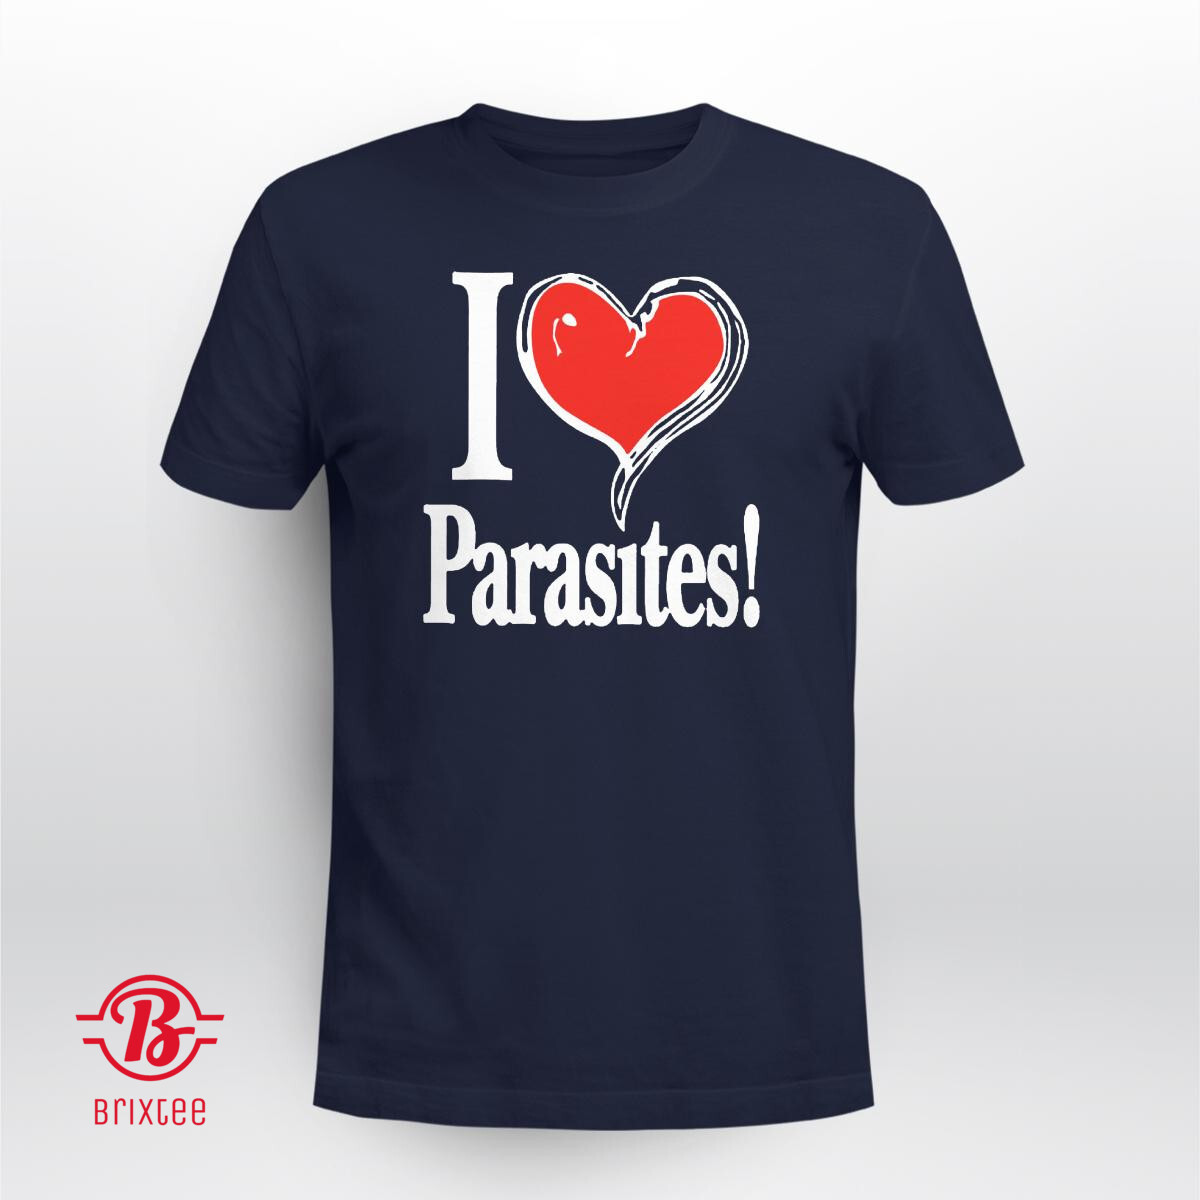  I Love Parasites 